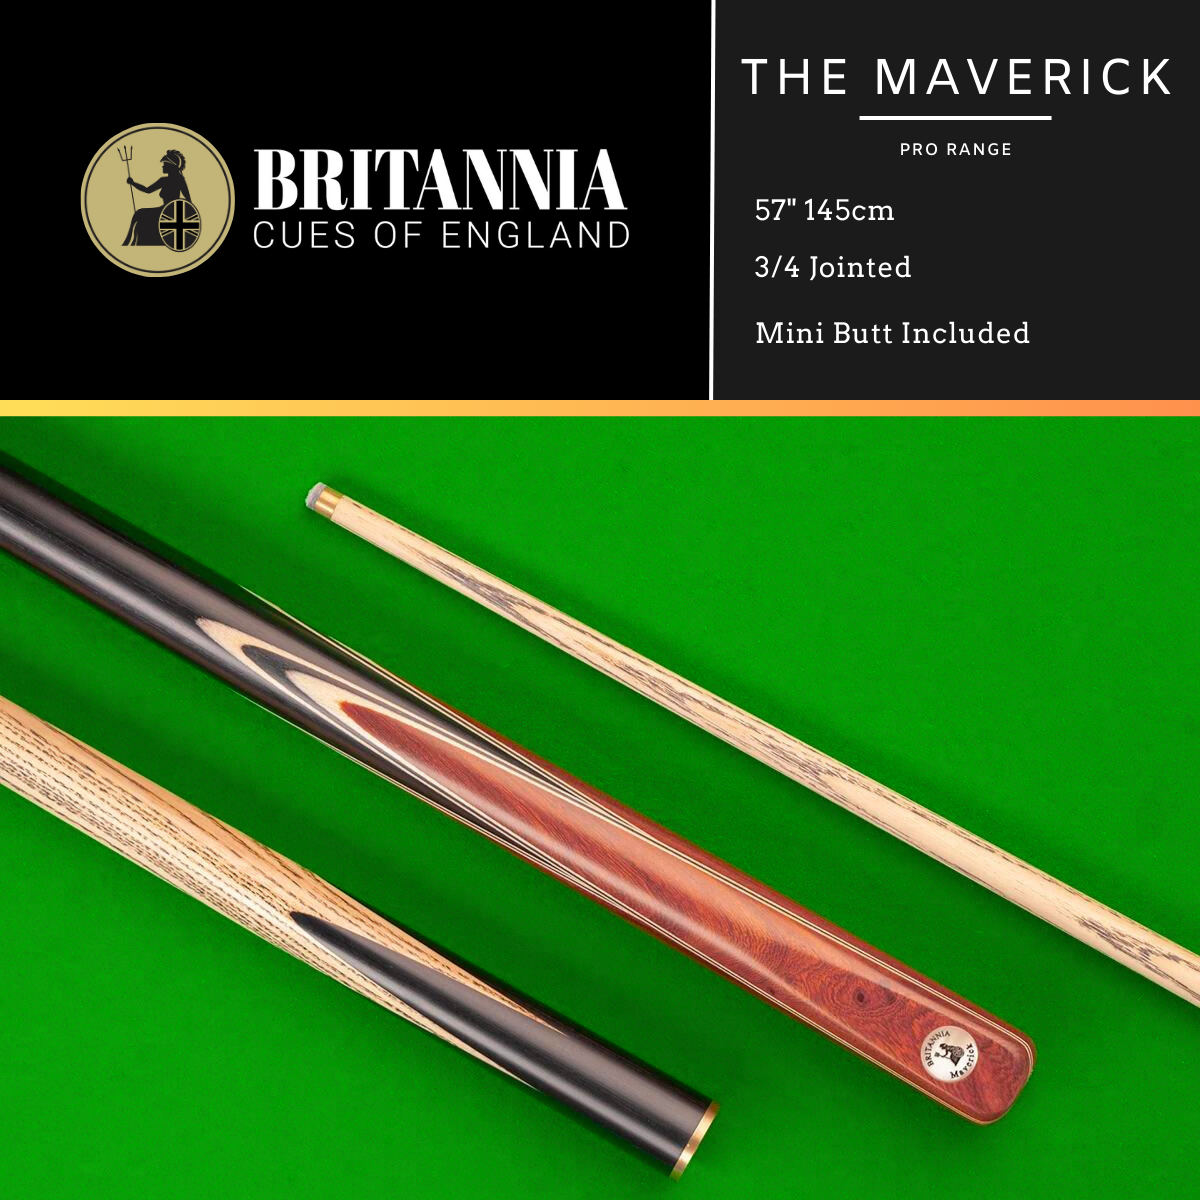 Britannia 3/4 Jointed Maverick Pro Range British Pool Cue